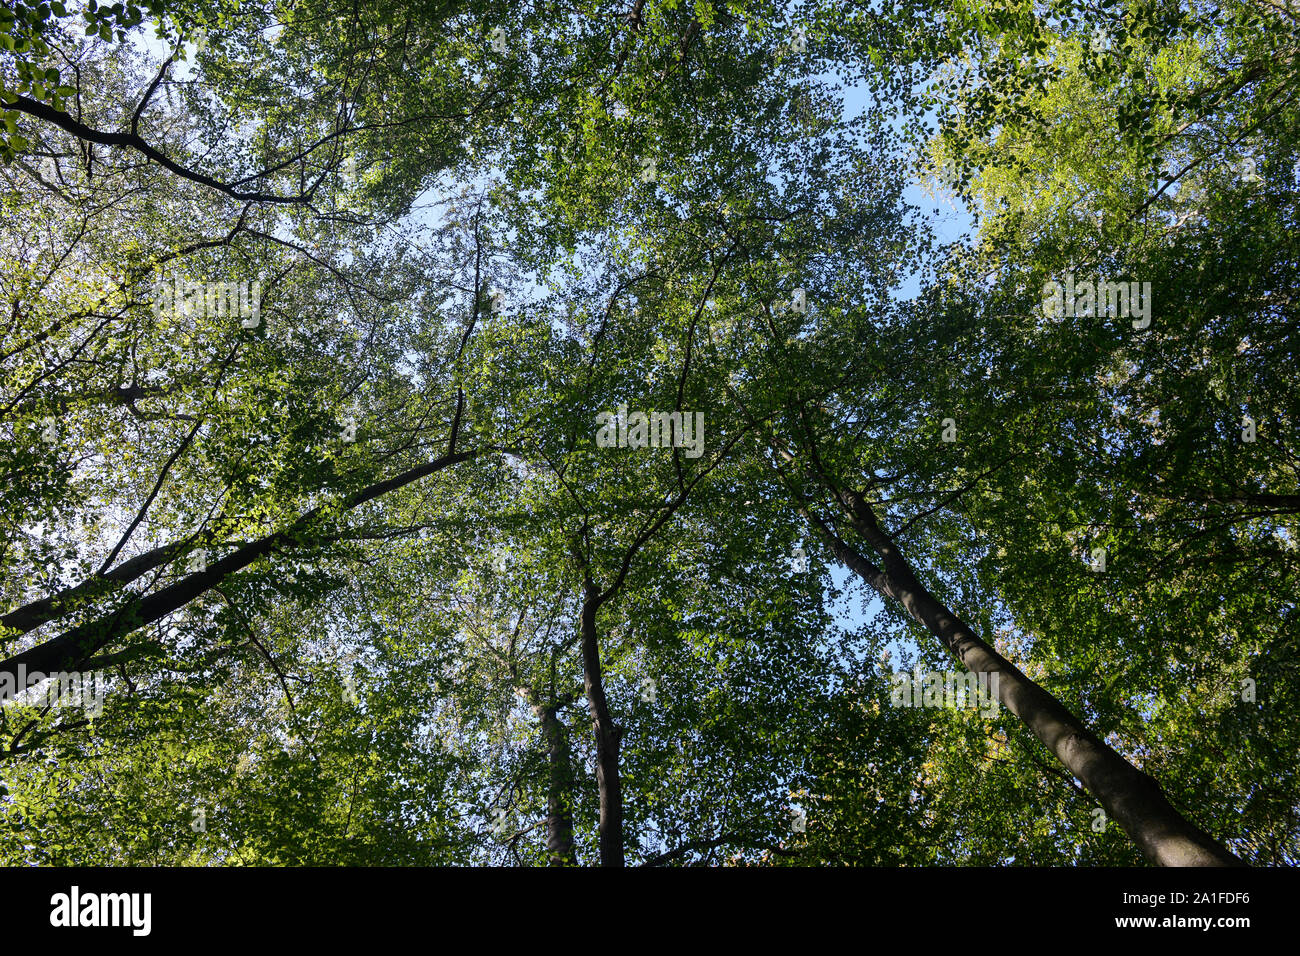 Germania, foresta di faggio / Deutschland, Laubbaeume Buche, Wald in der Lueneburger Heide Foto Stock